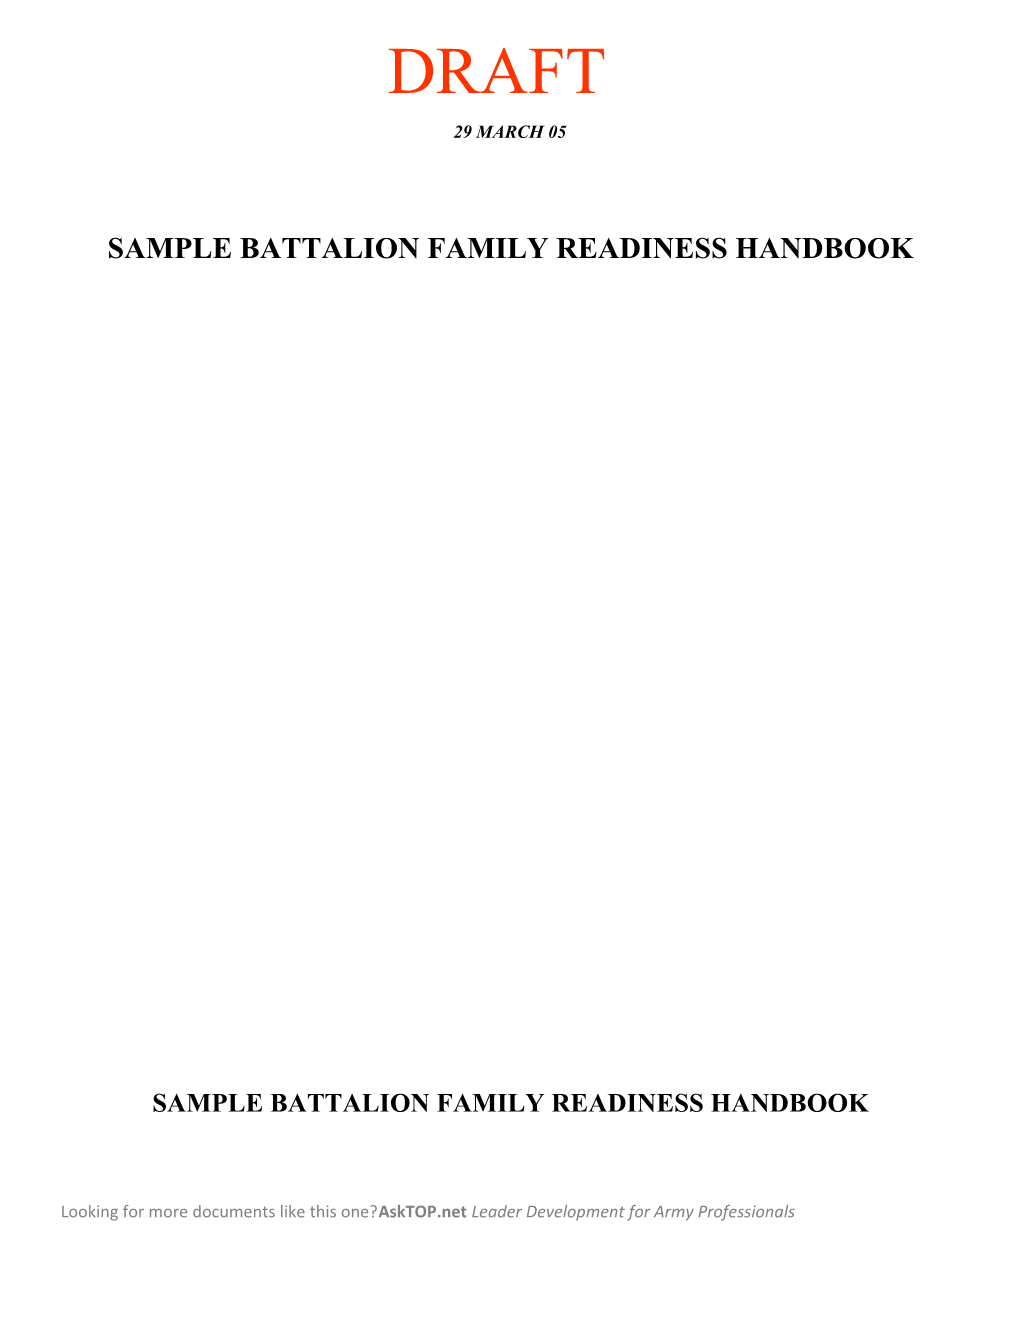 Sample Battalion Family Readiness Handbook